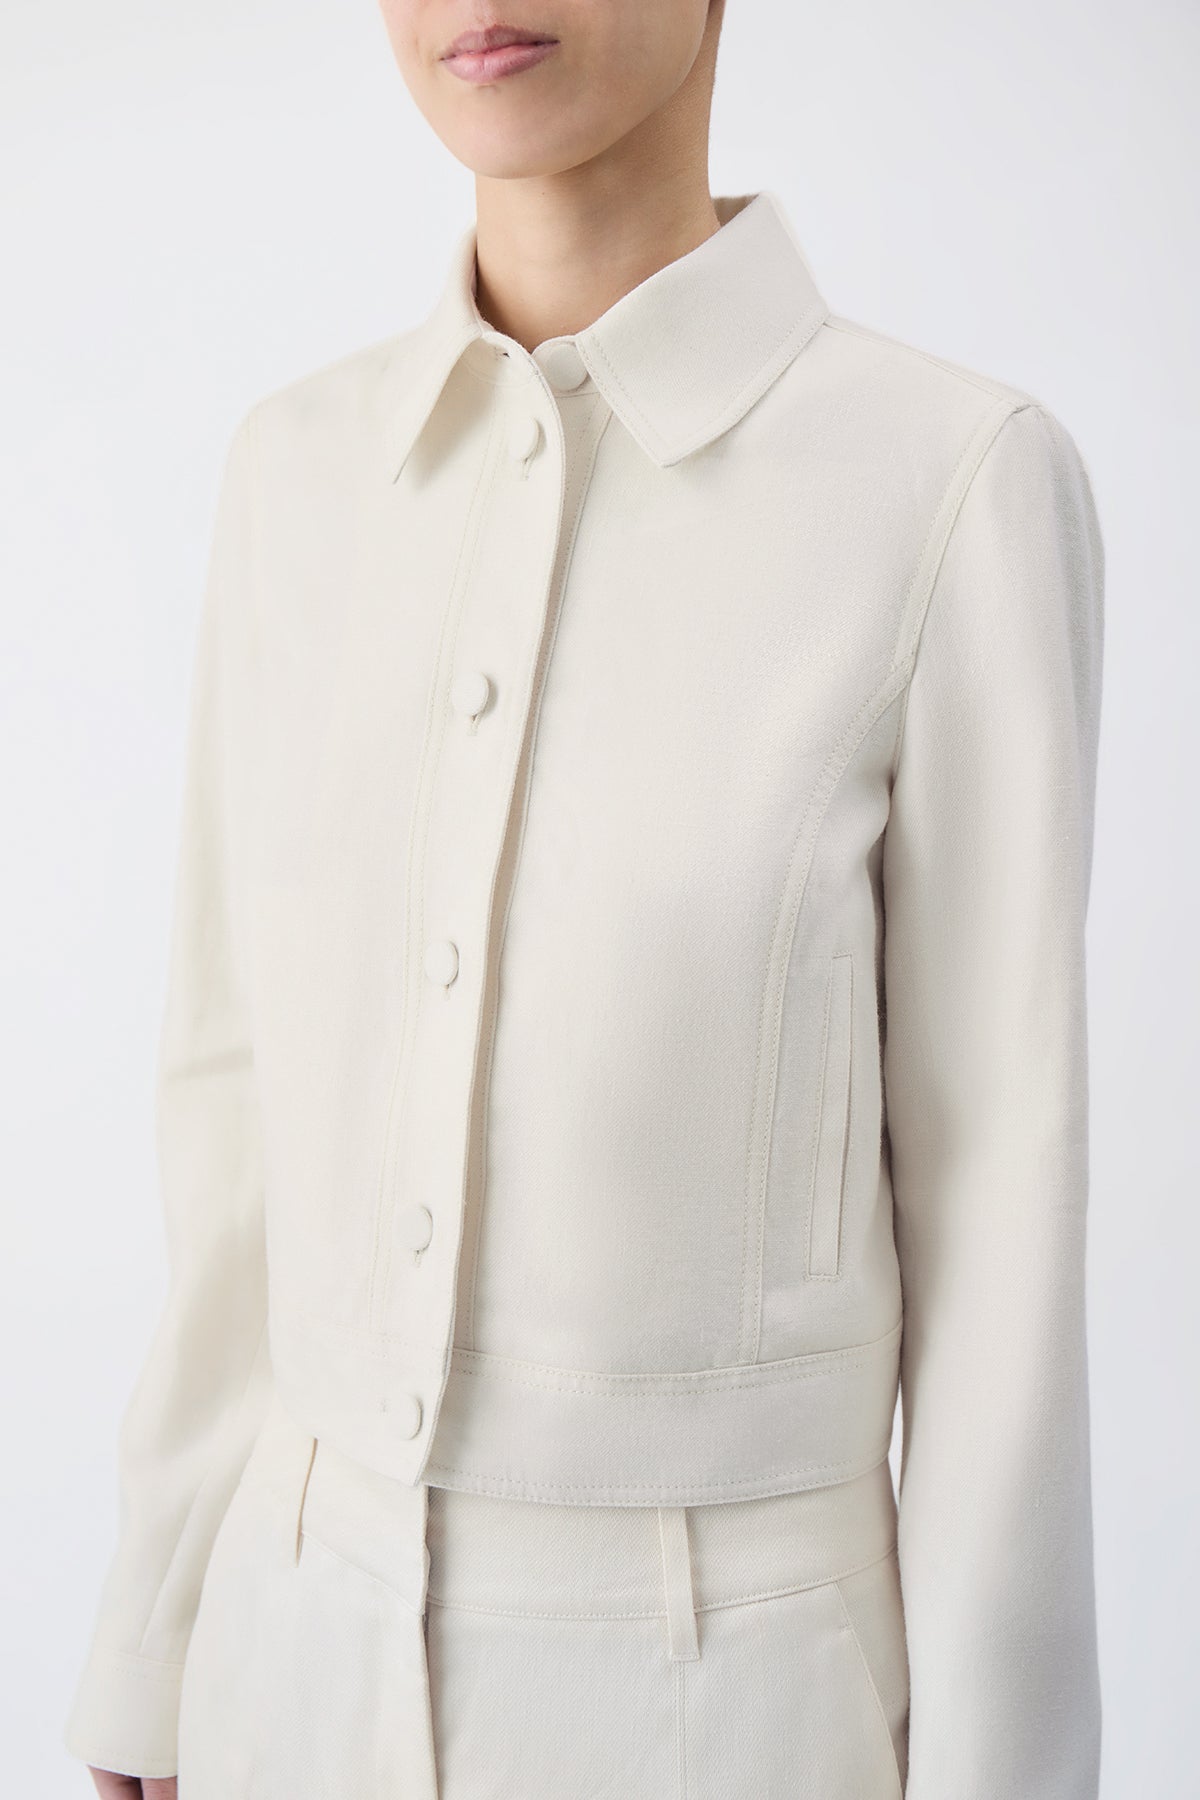 Thereza Jacket in Ivory Linen Virgin Wool